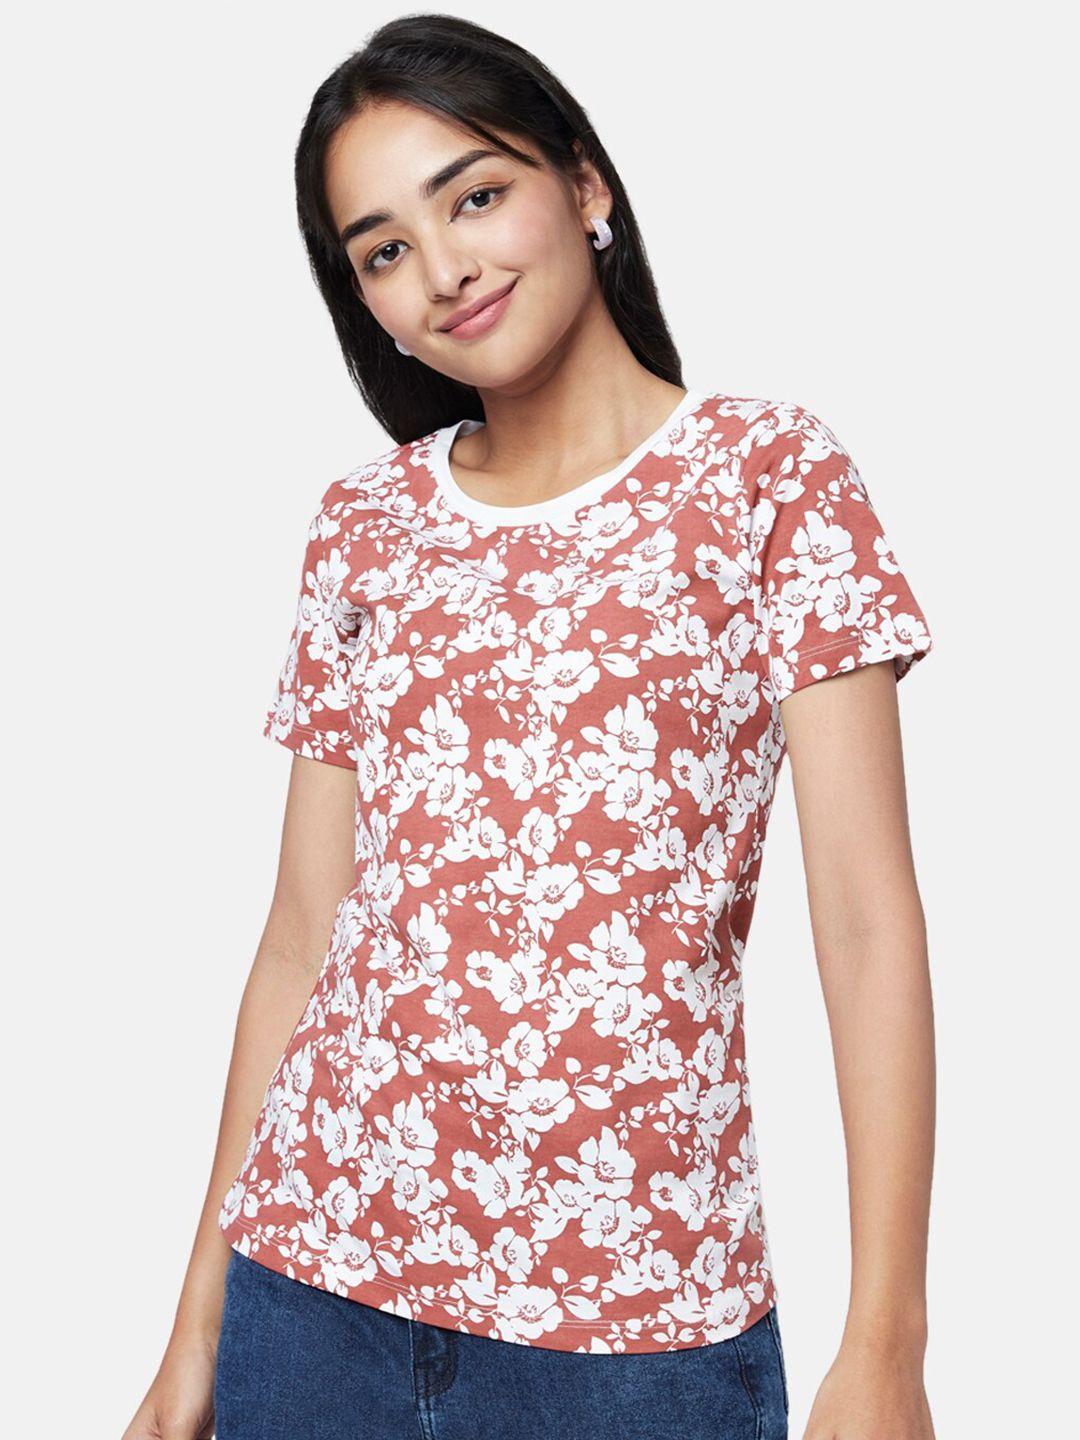 yu-by-pantaloons-women-floral-printed-cotton-t-shirt